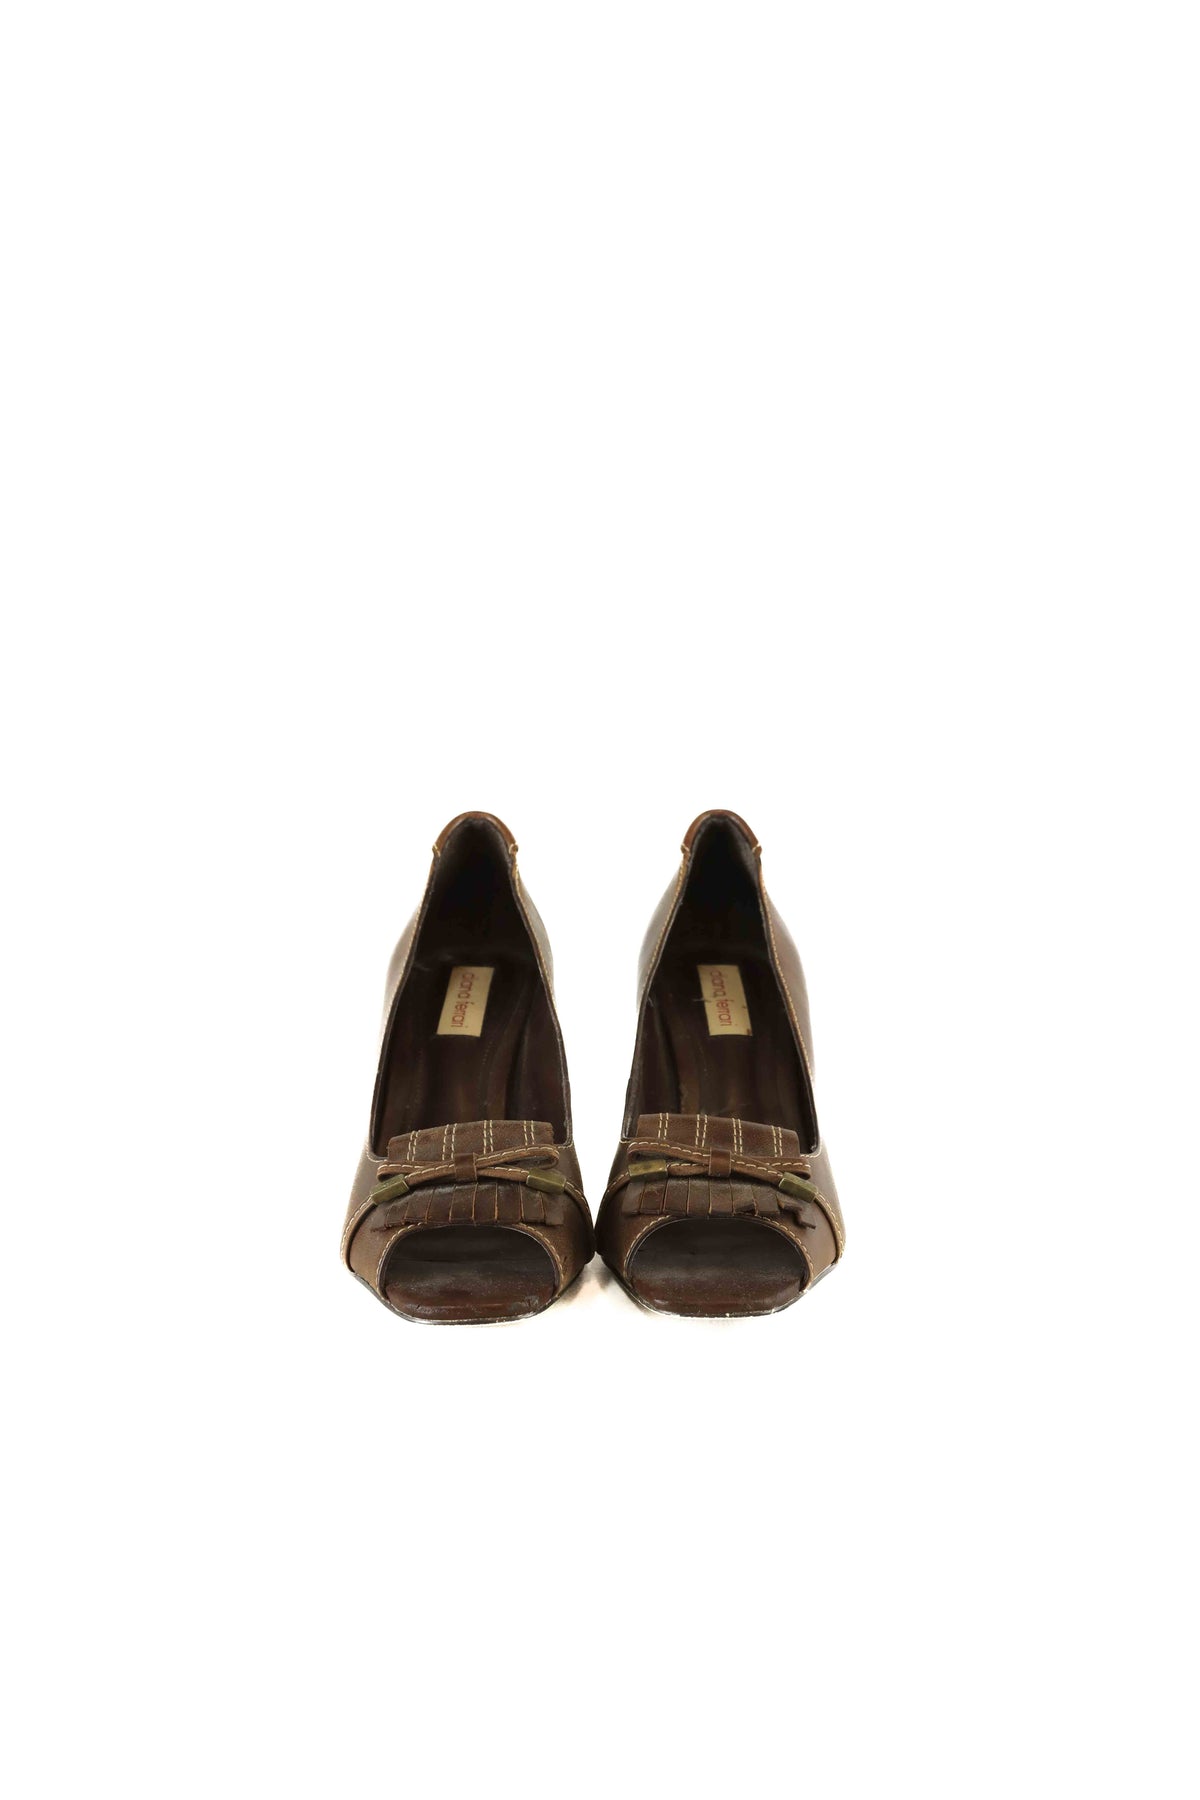 Diana Ferrari Brown Heels 8